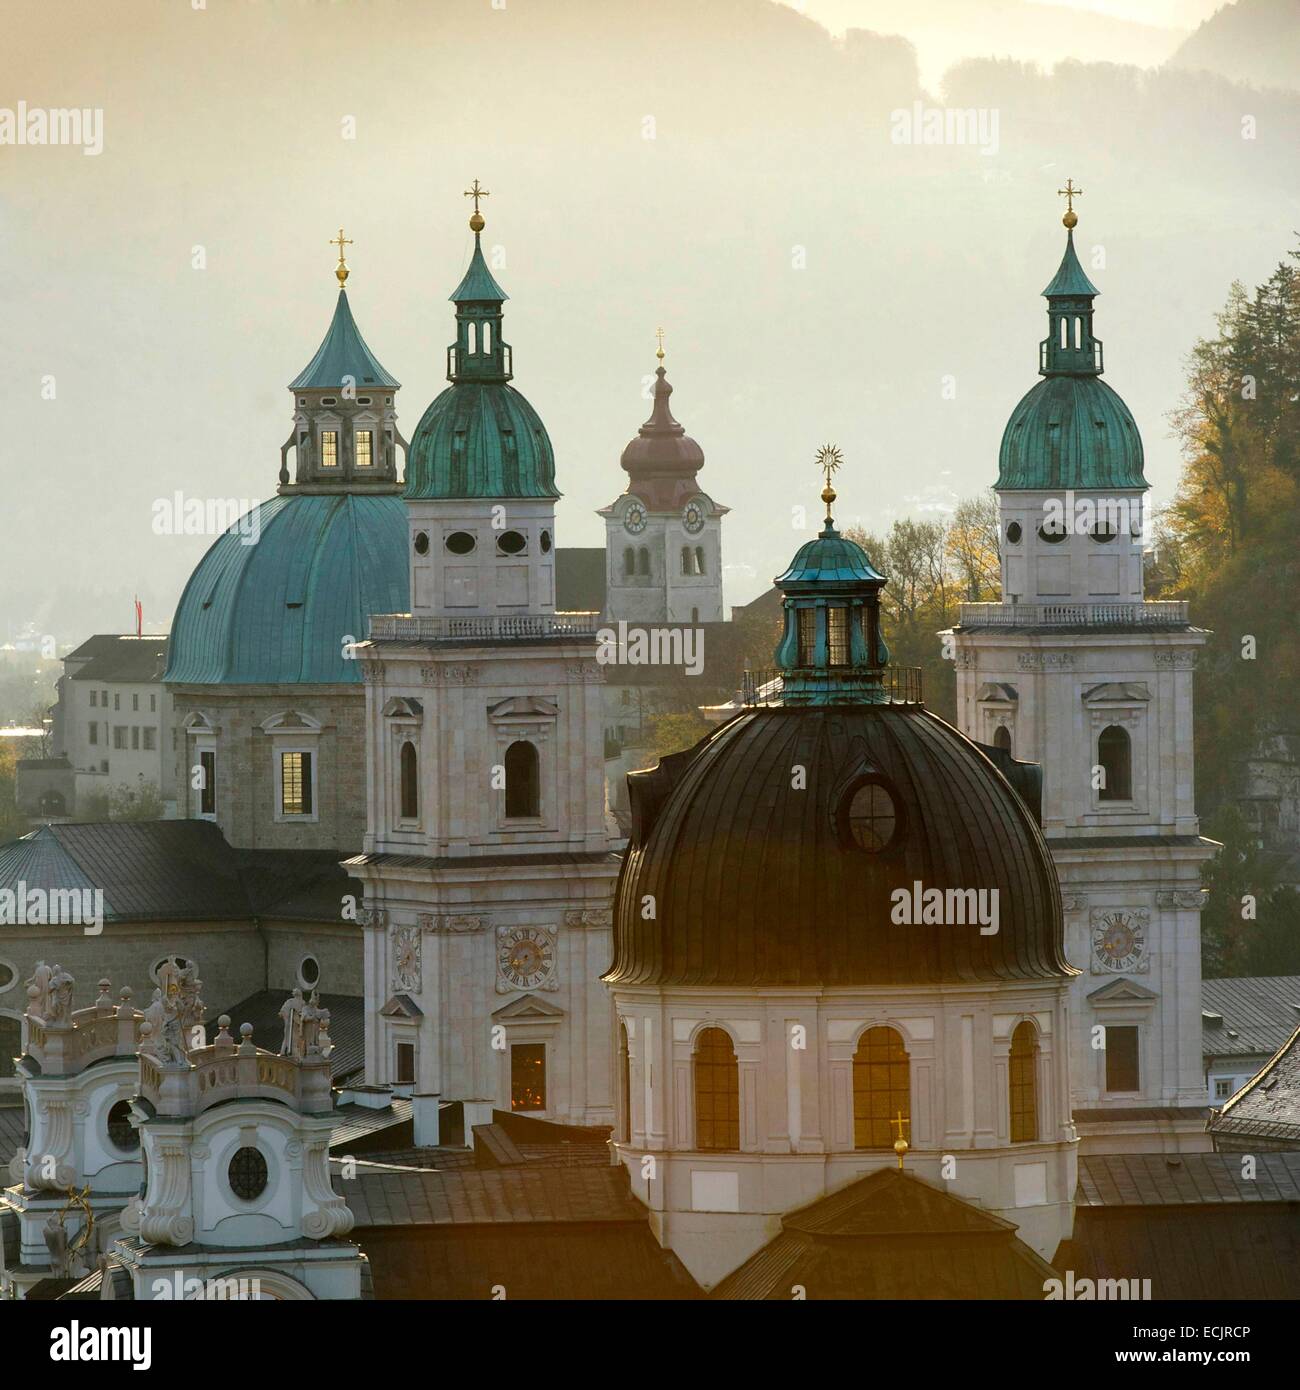 Austria, Salzburgo, centro histórico catalogado como Patrimonio de la Humanidad por la UNESCO, las cúpulas del centro histórico con la catedral Foto de stock